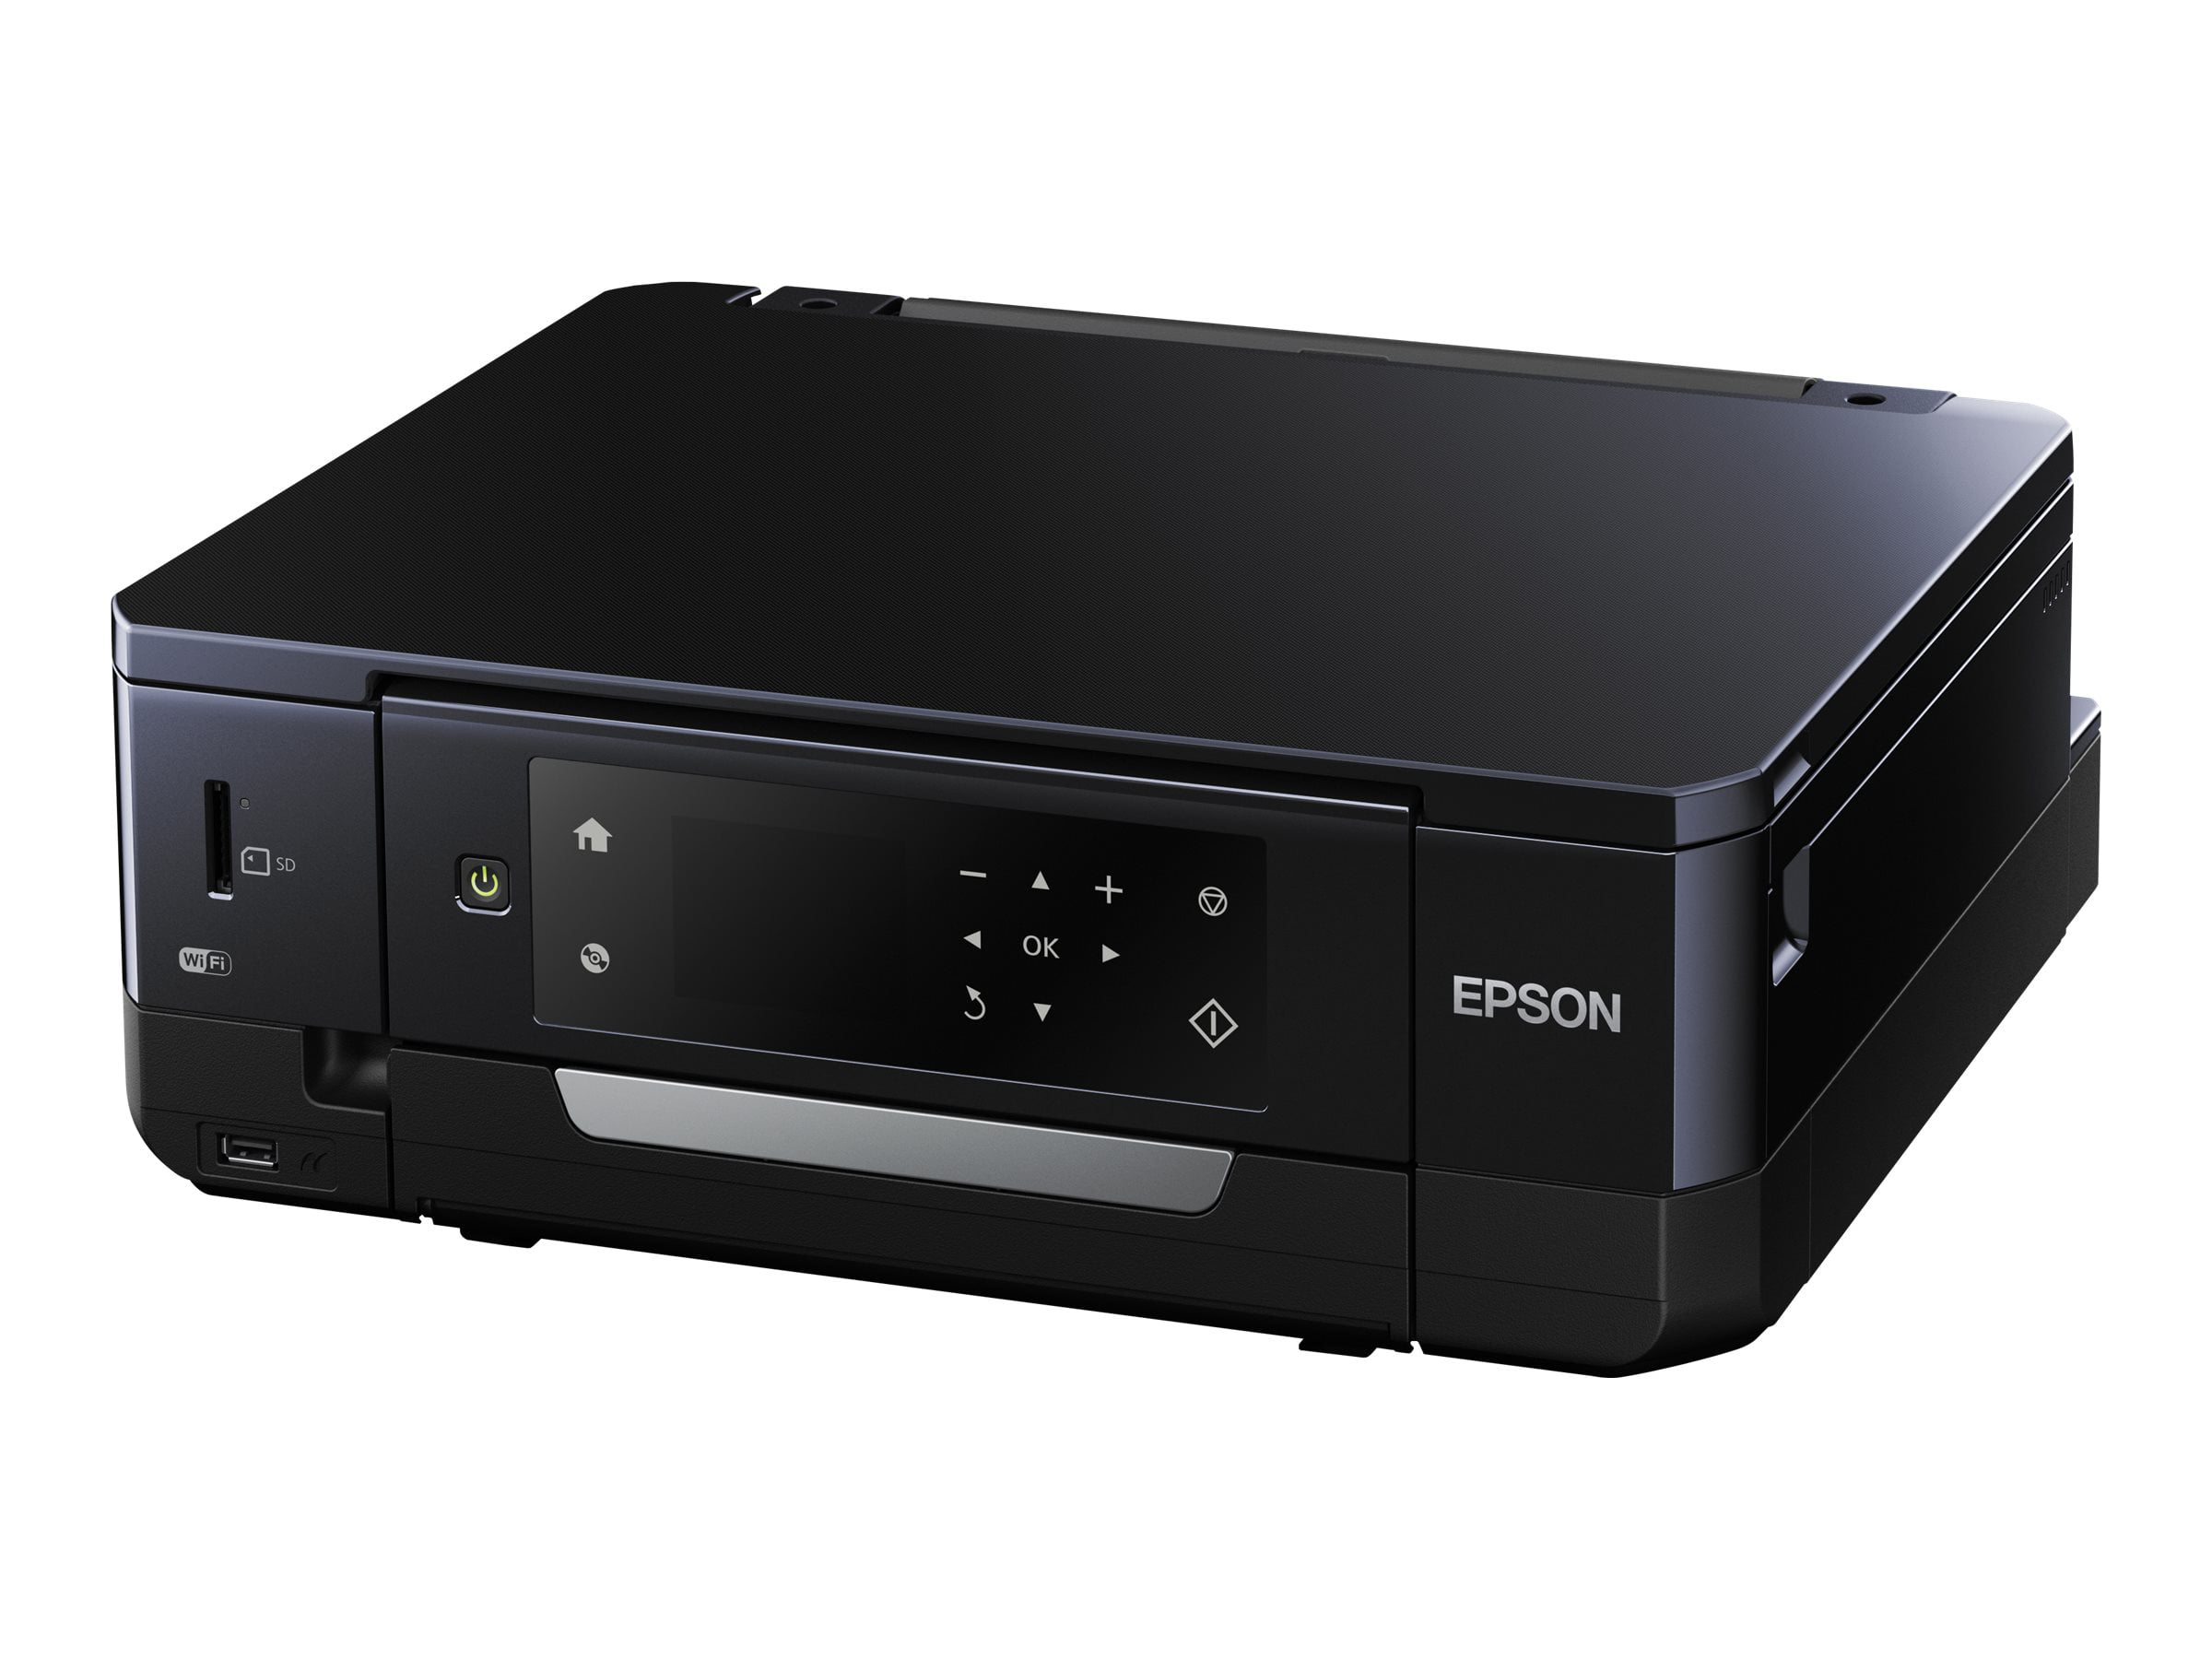  Epson  Expression Premium XP 640  multifunction printer 